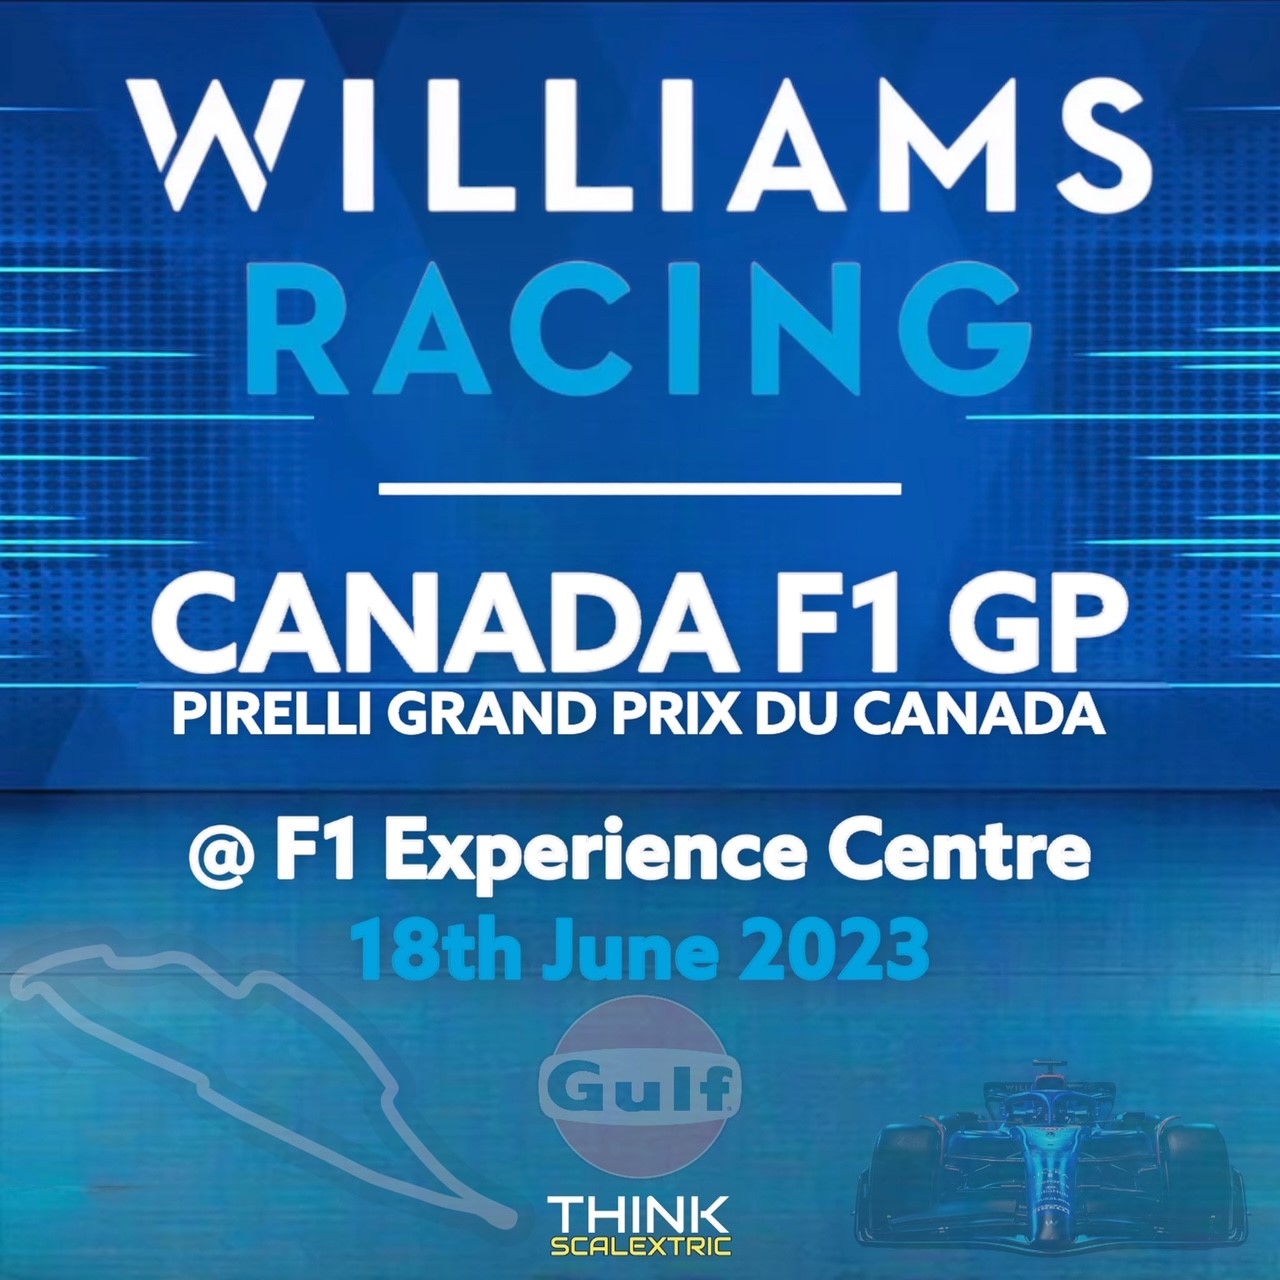 williams f1 racing race day hospitality canada f1 2023 gp